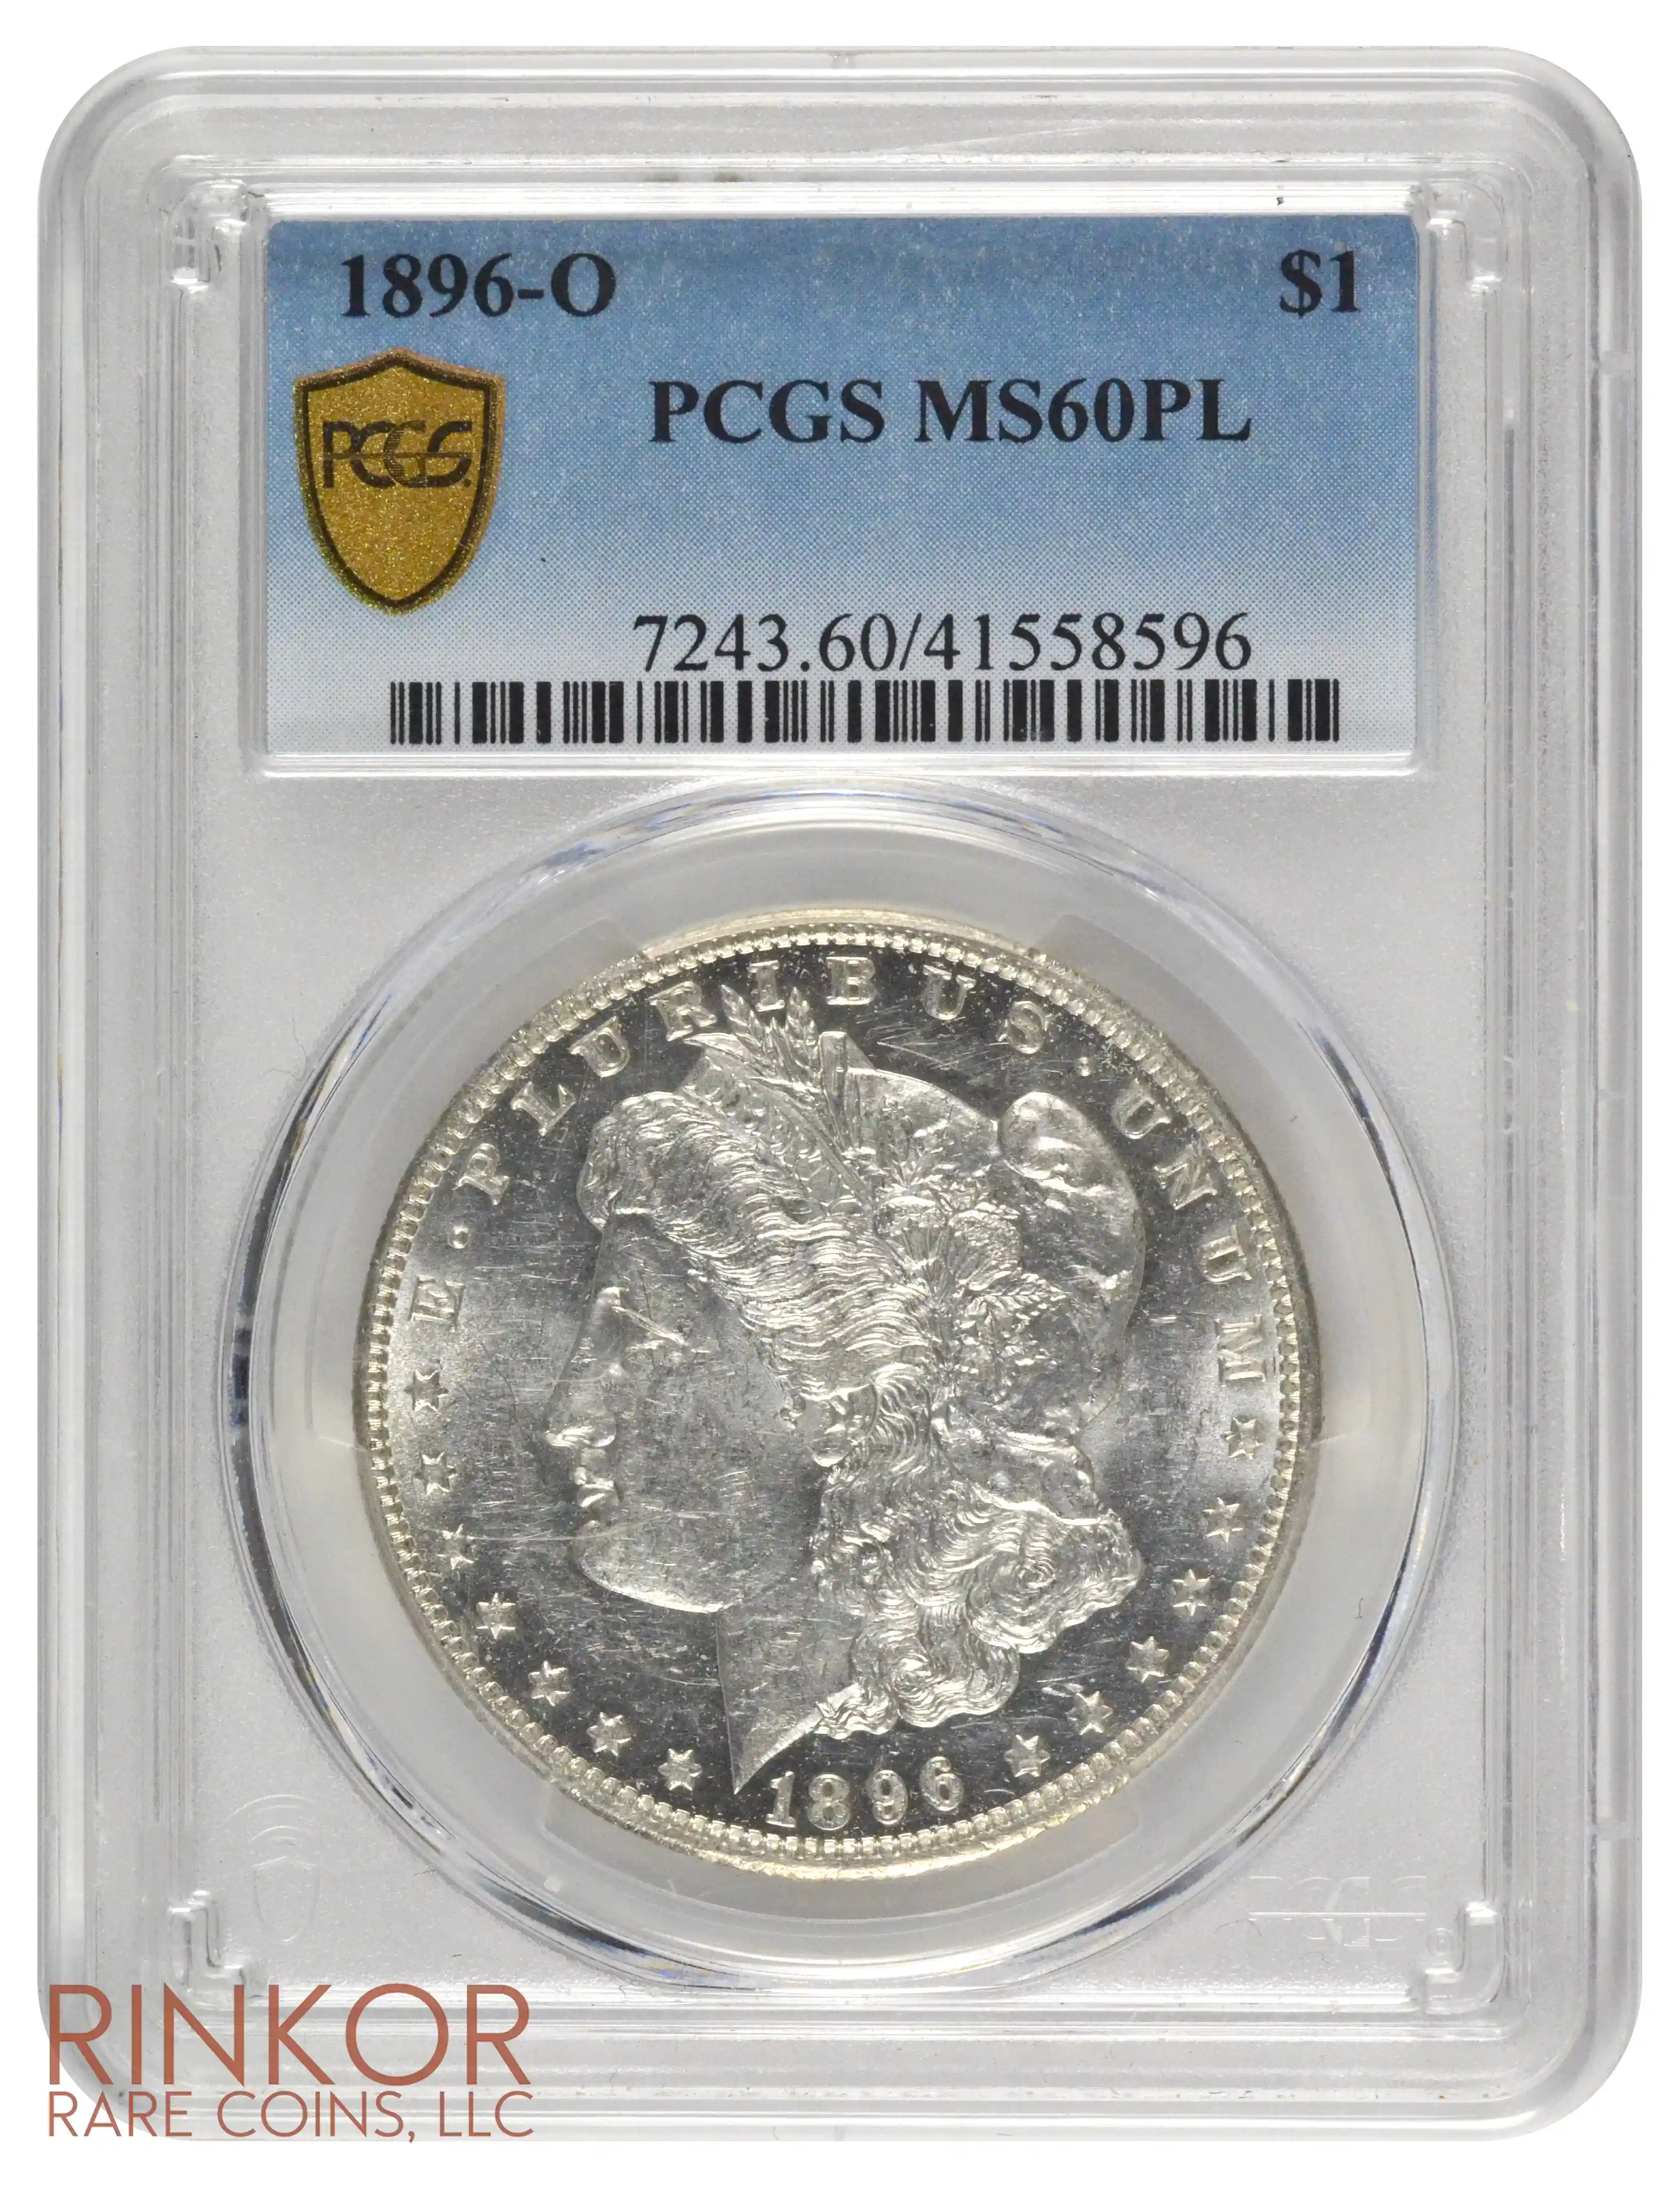 1896-O $1 PCGS MS 60 PL